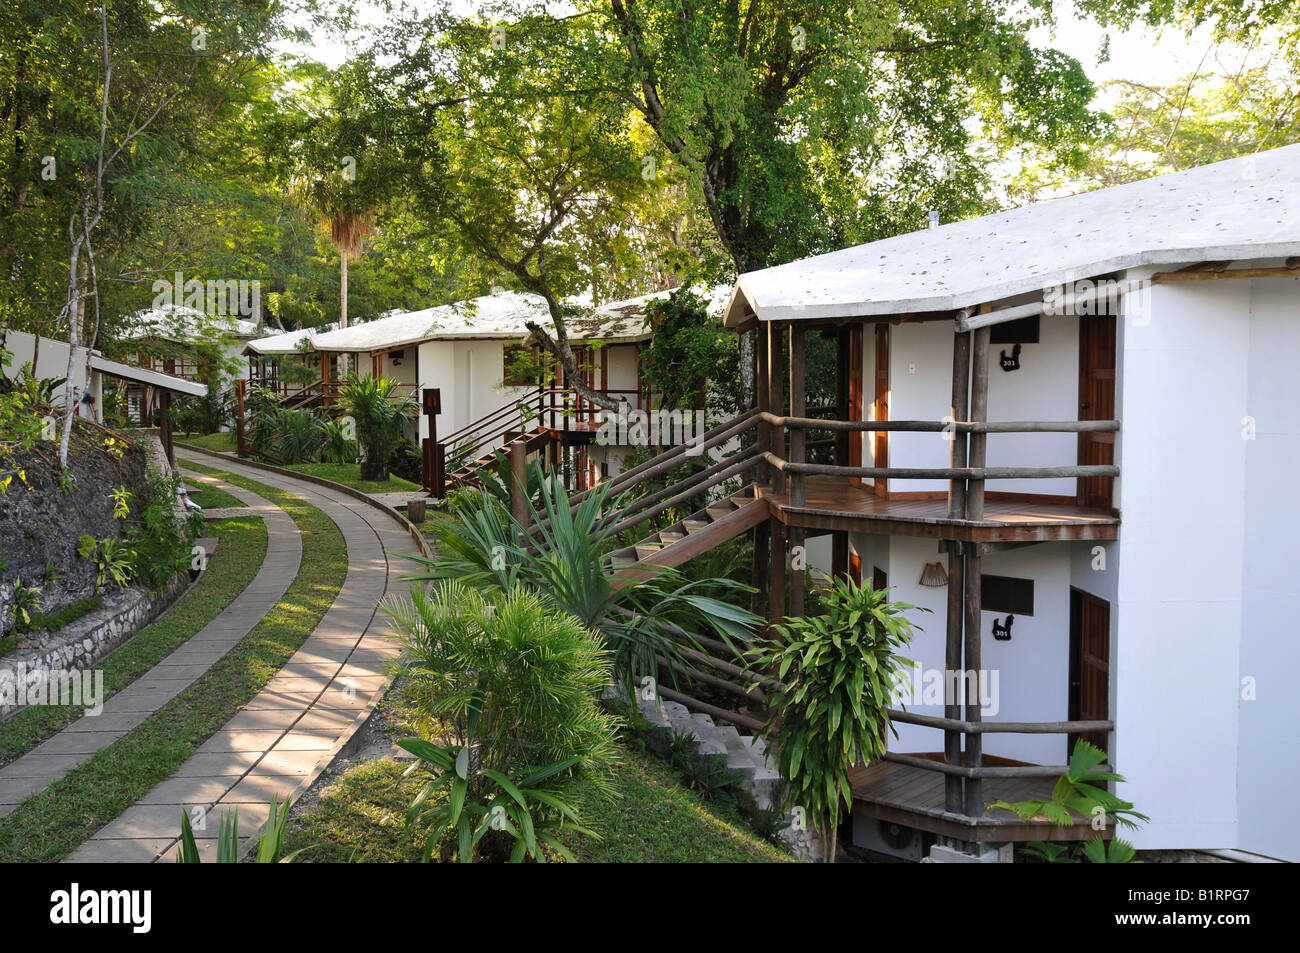 Hotel Villa Maya Tikal, Lake Petenchel, Santa Elena, Guatemala, Central America Stock Photo